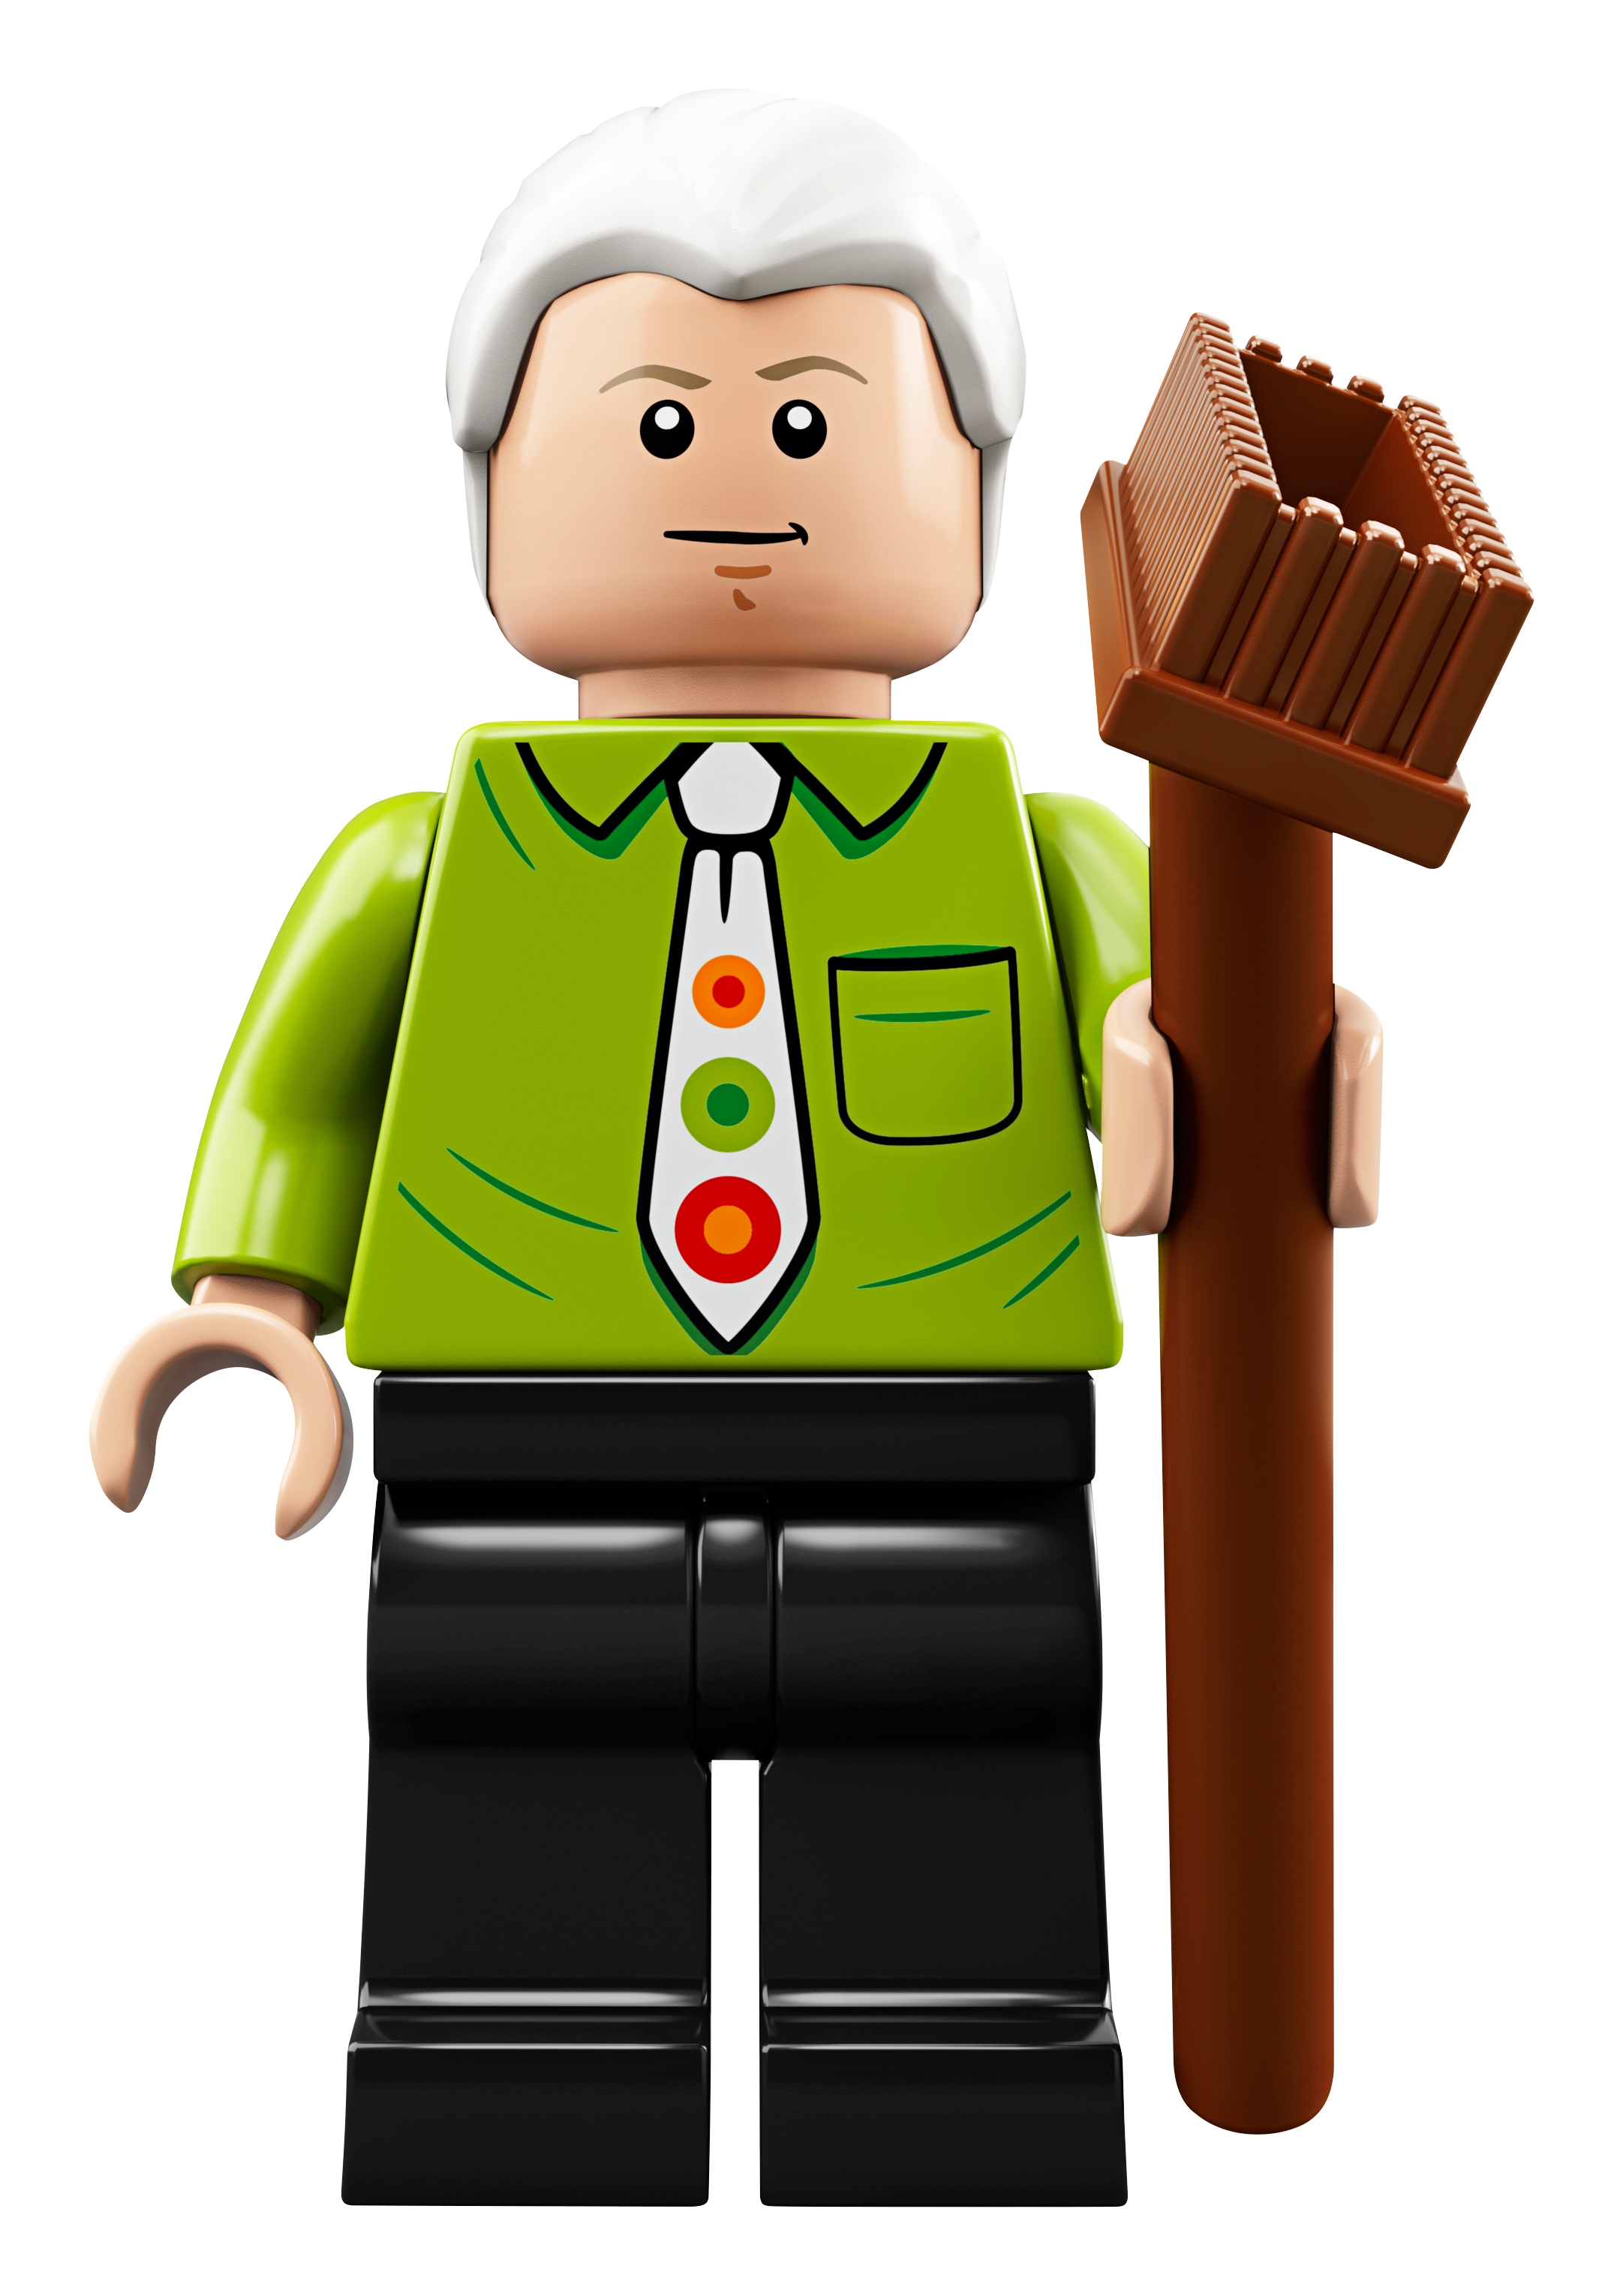 Details about   LEGO FRIENDS Central Perk Ideas set 21319 US Seller new comes 7 mini figures